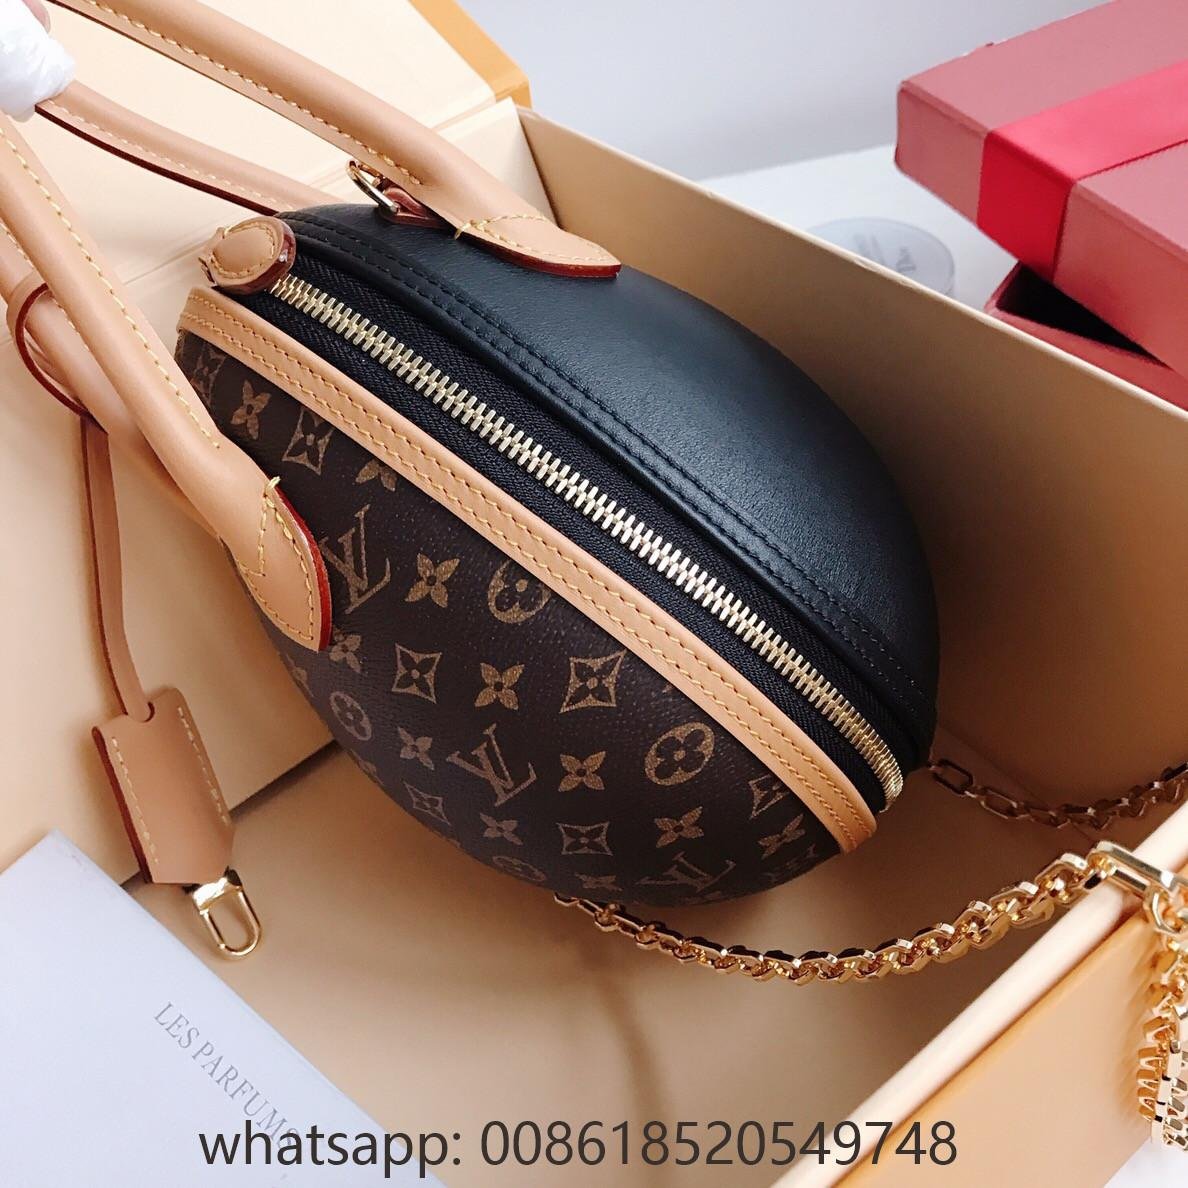 Cheap LV EGG BAG Louis Vuitton Tote bags discount Louis Vuitton bags on sale (China Trading ...